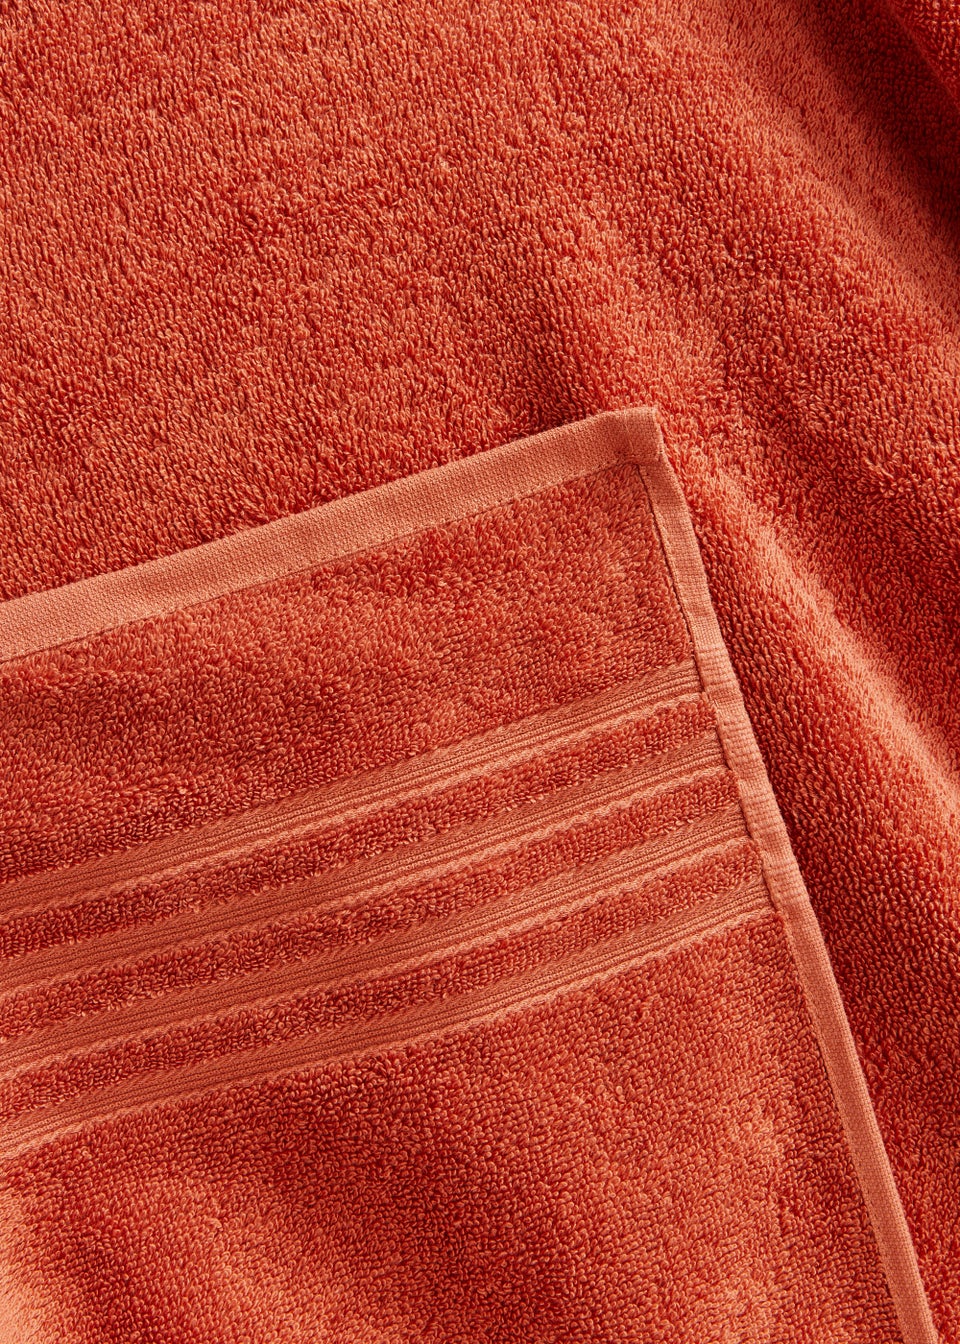 Orange 100% Egyptian Cotton XL Bath Sheet